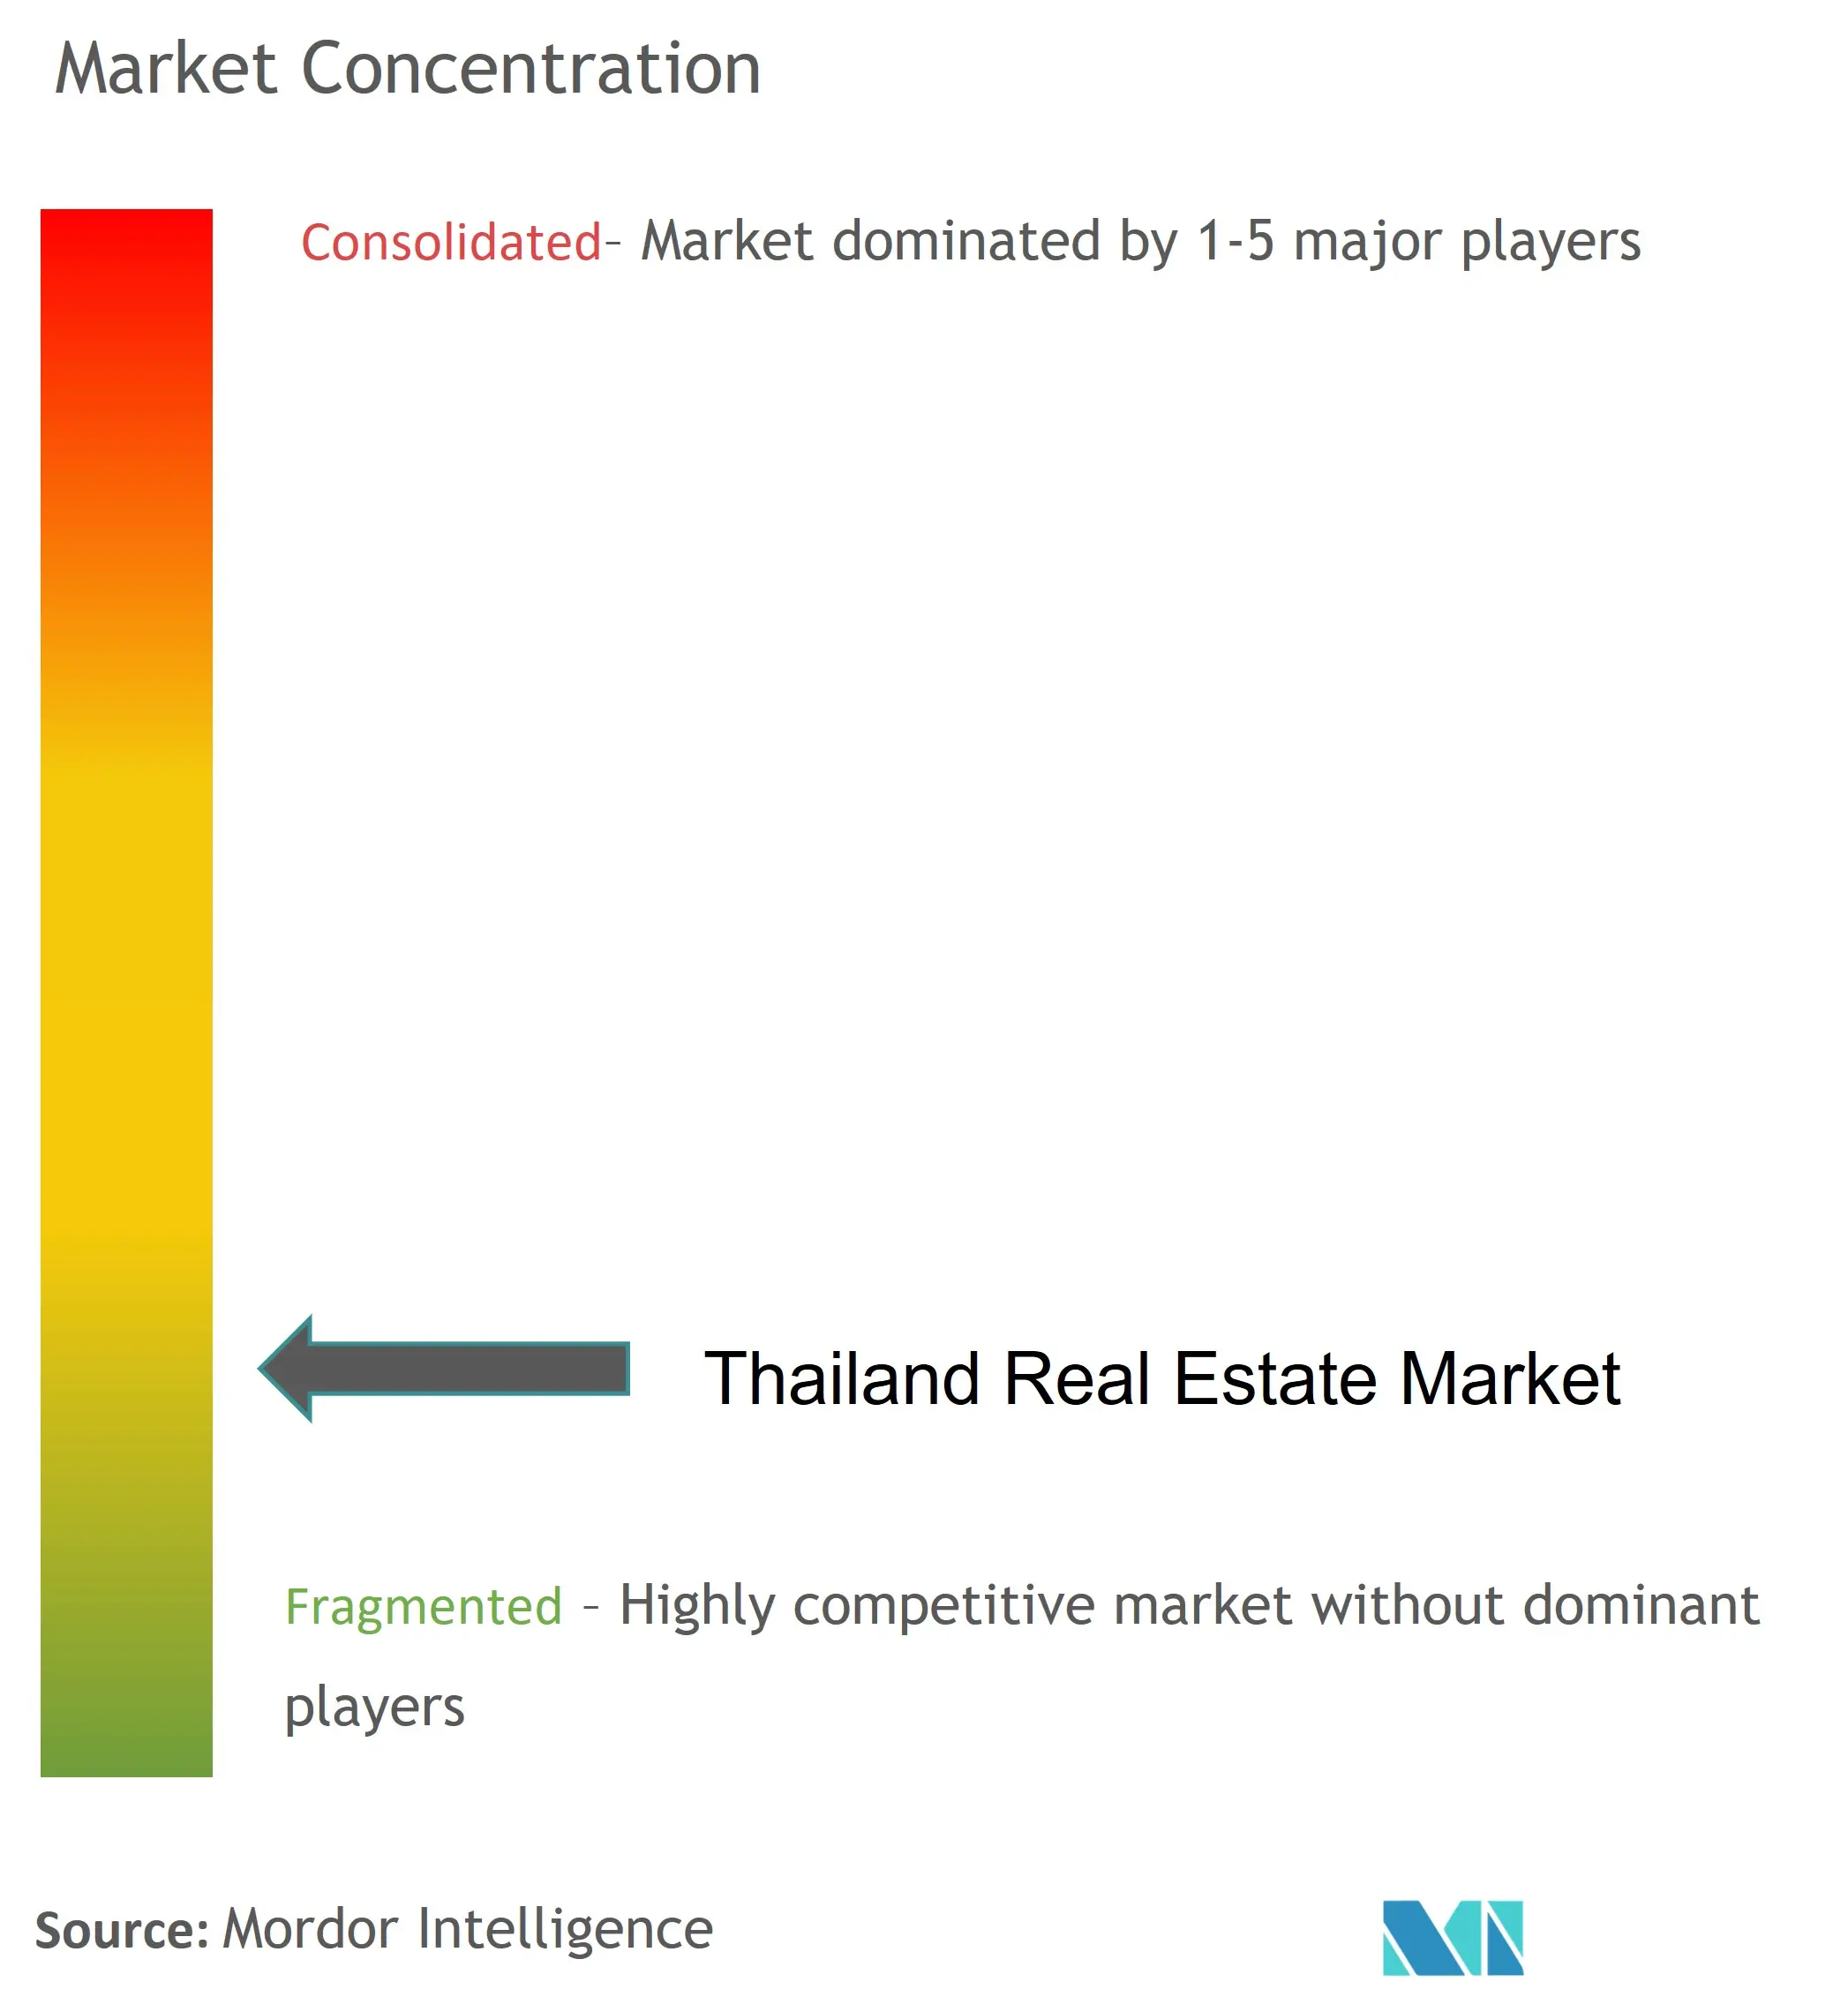 Thailand Real Estate Market Concentration